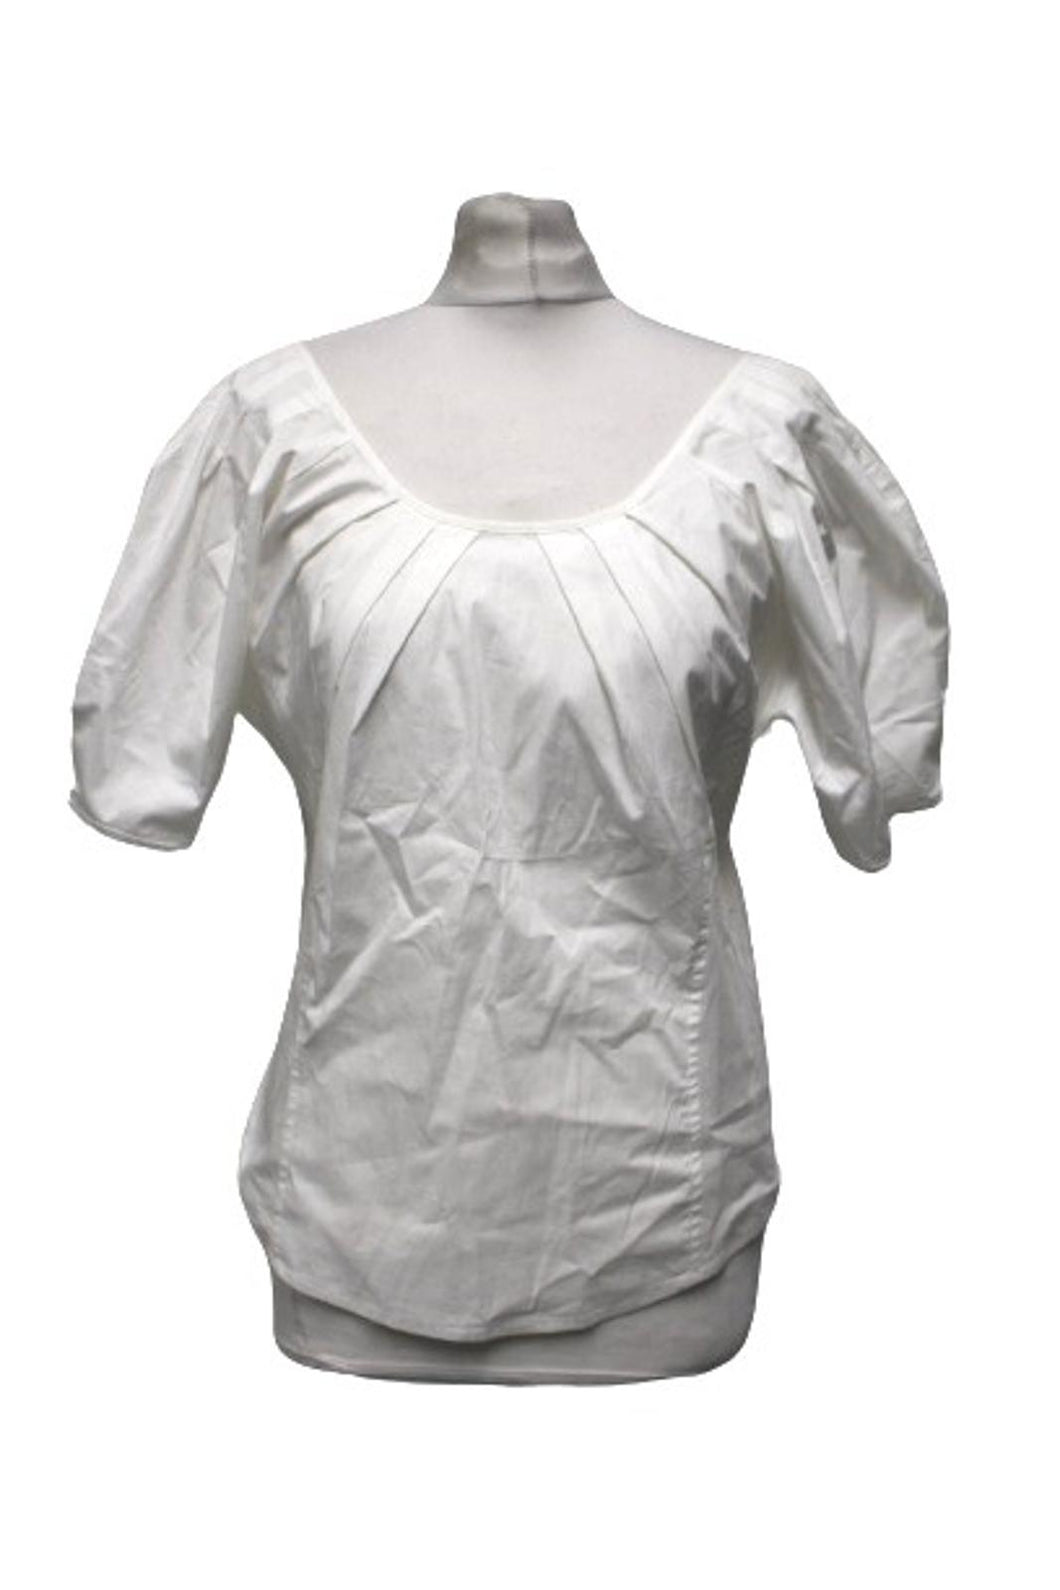 J.CREW Ladies White Cotton Blend Short Sleeve Scoop Neck Pleated Top US8 UK12